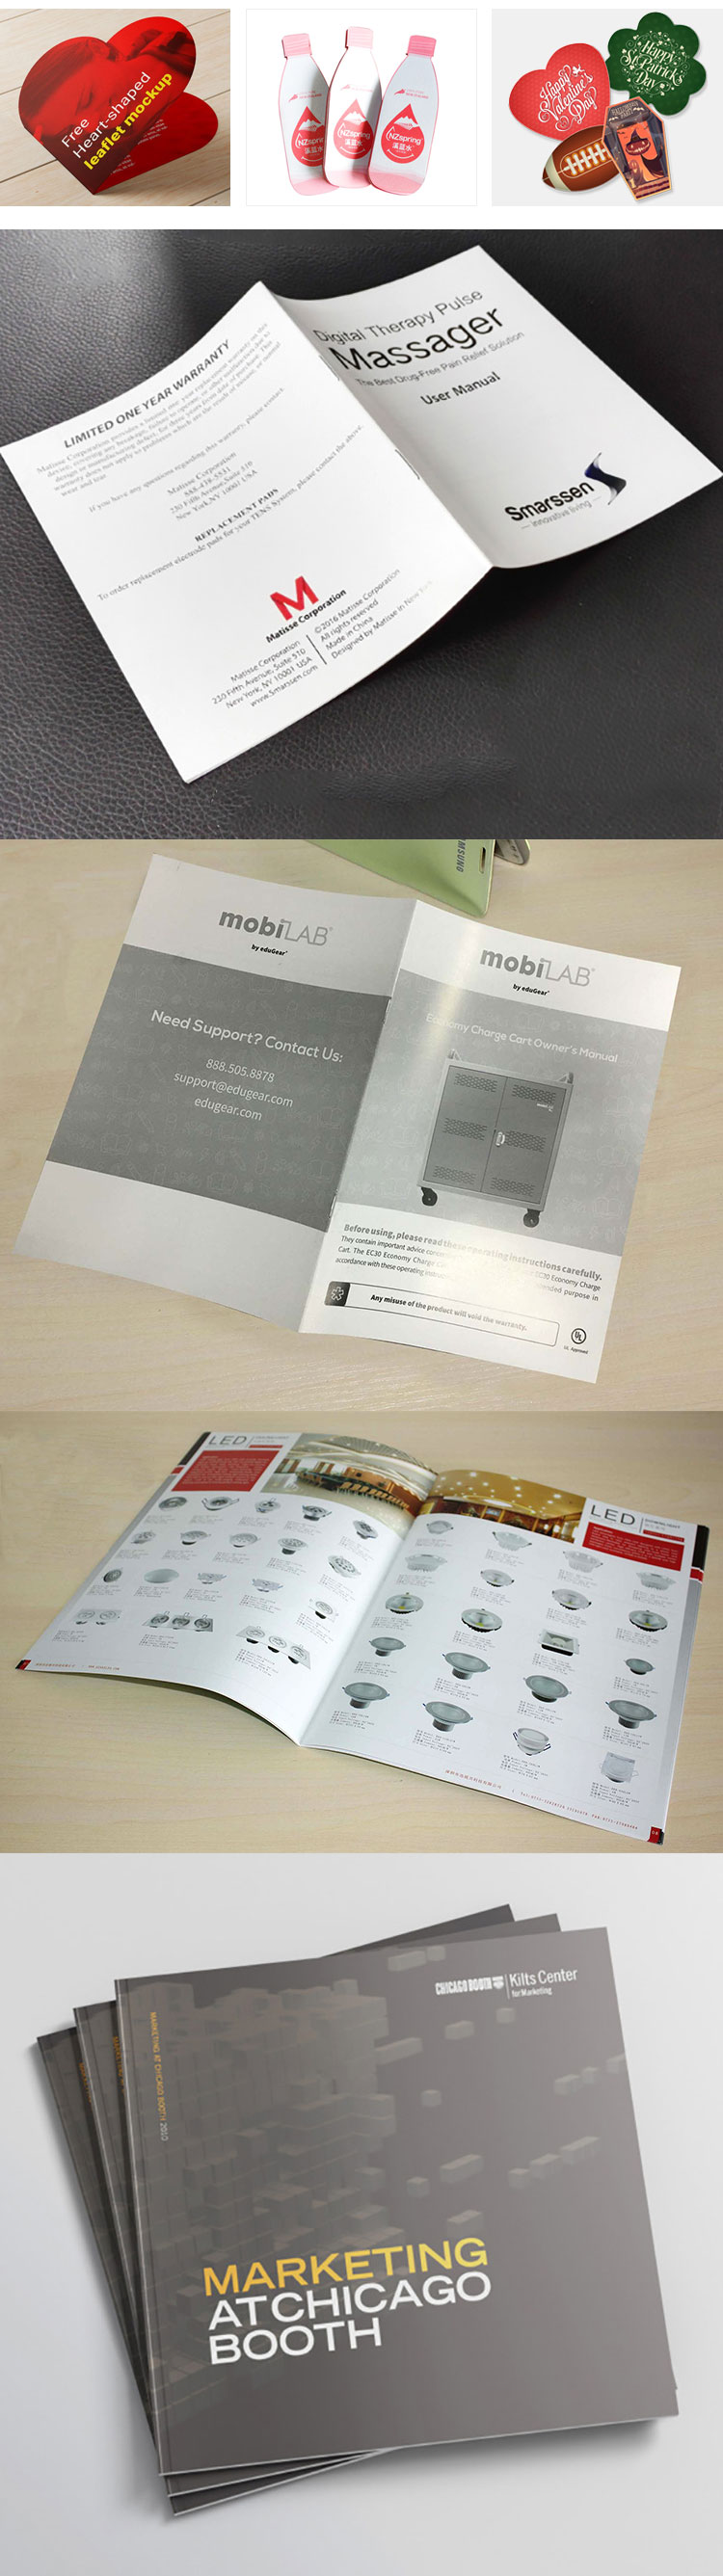 Custom design Printing service vintage poster flyer , Booklet, brochure, catalog printing